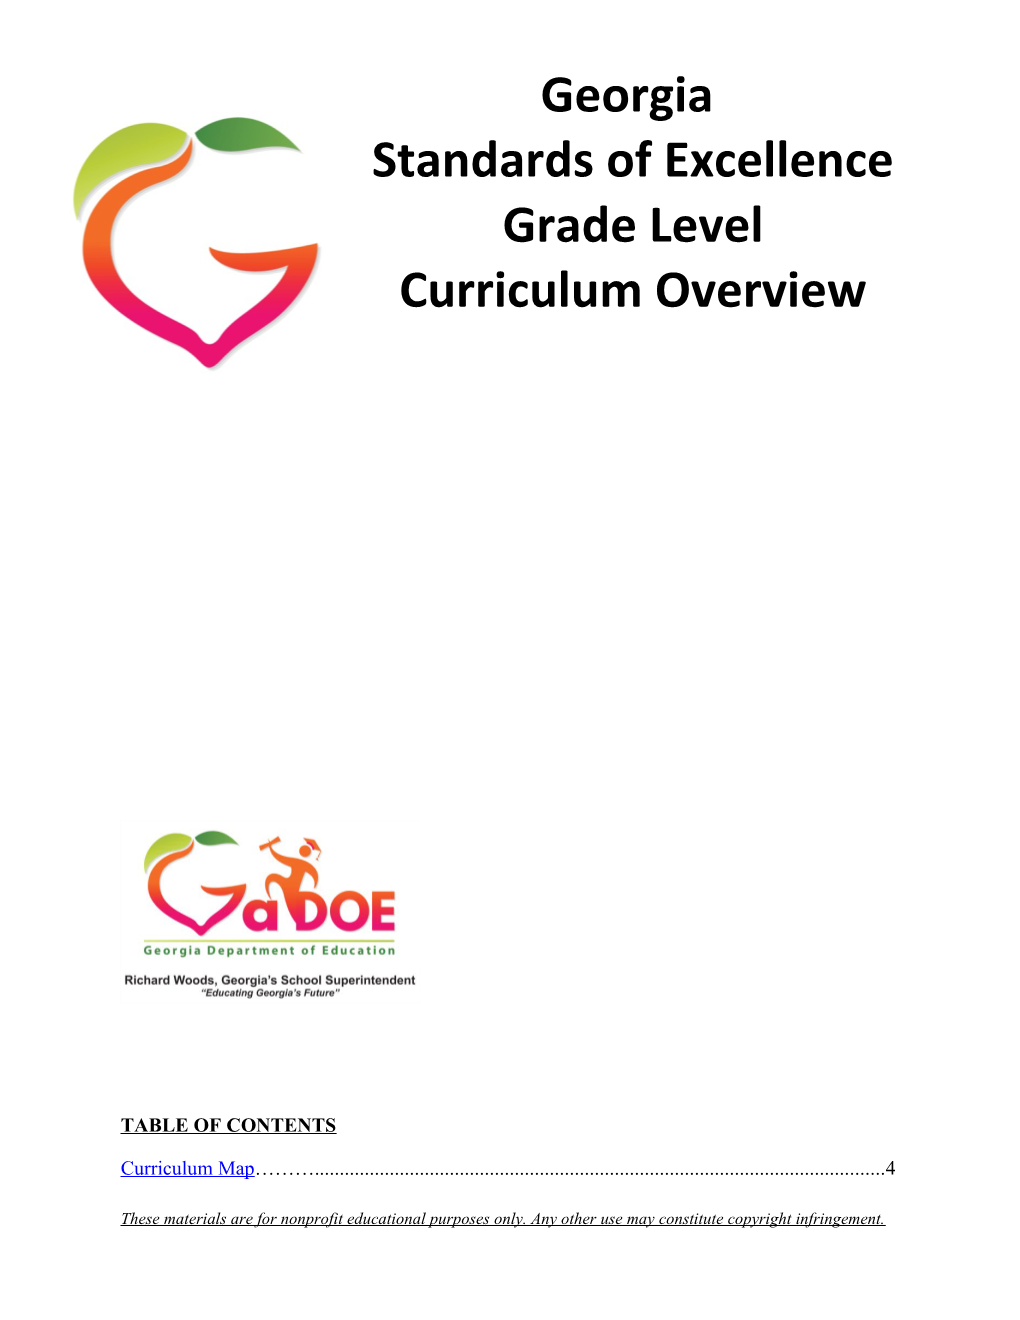 First Grade - Grade Level Overview